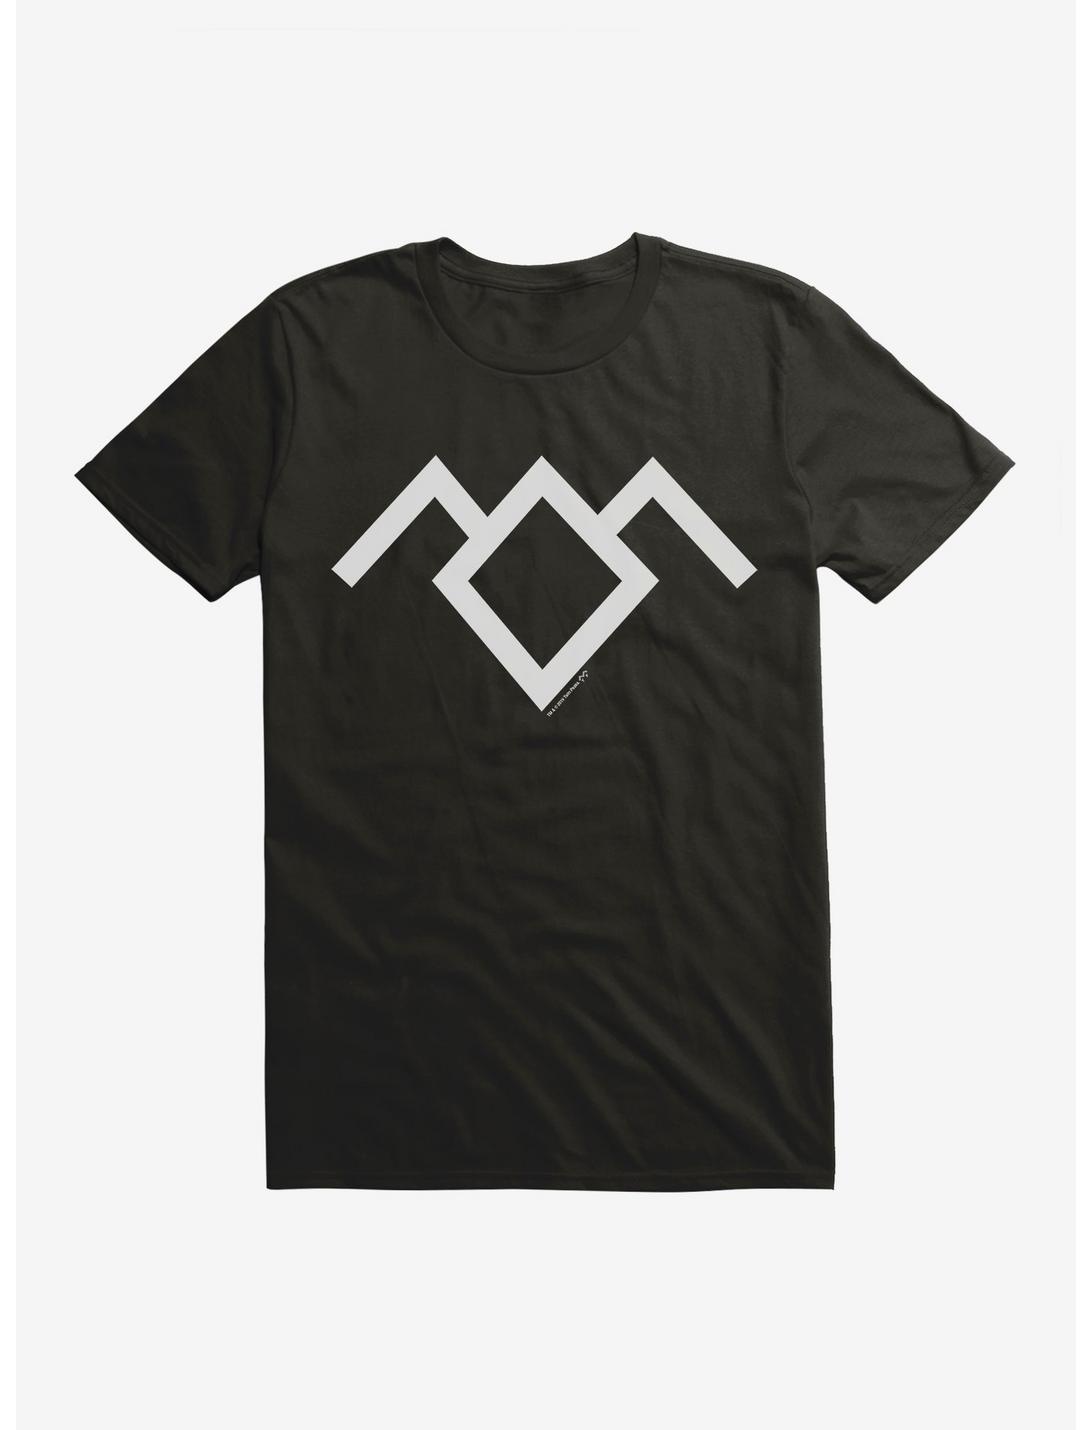 Twin Peaks Black Lodge Icon T-Shirt, , hi-res